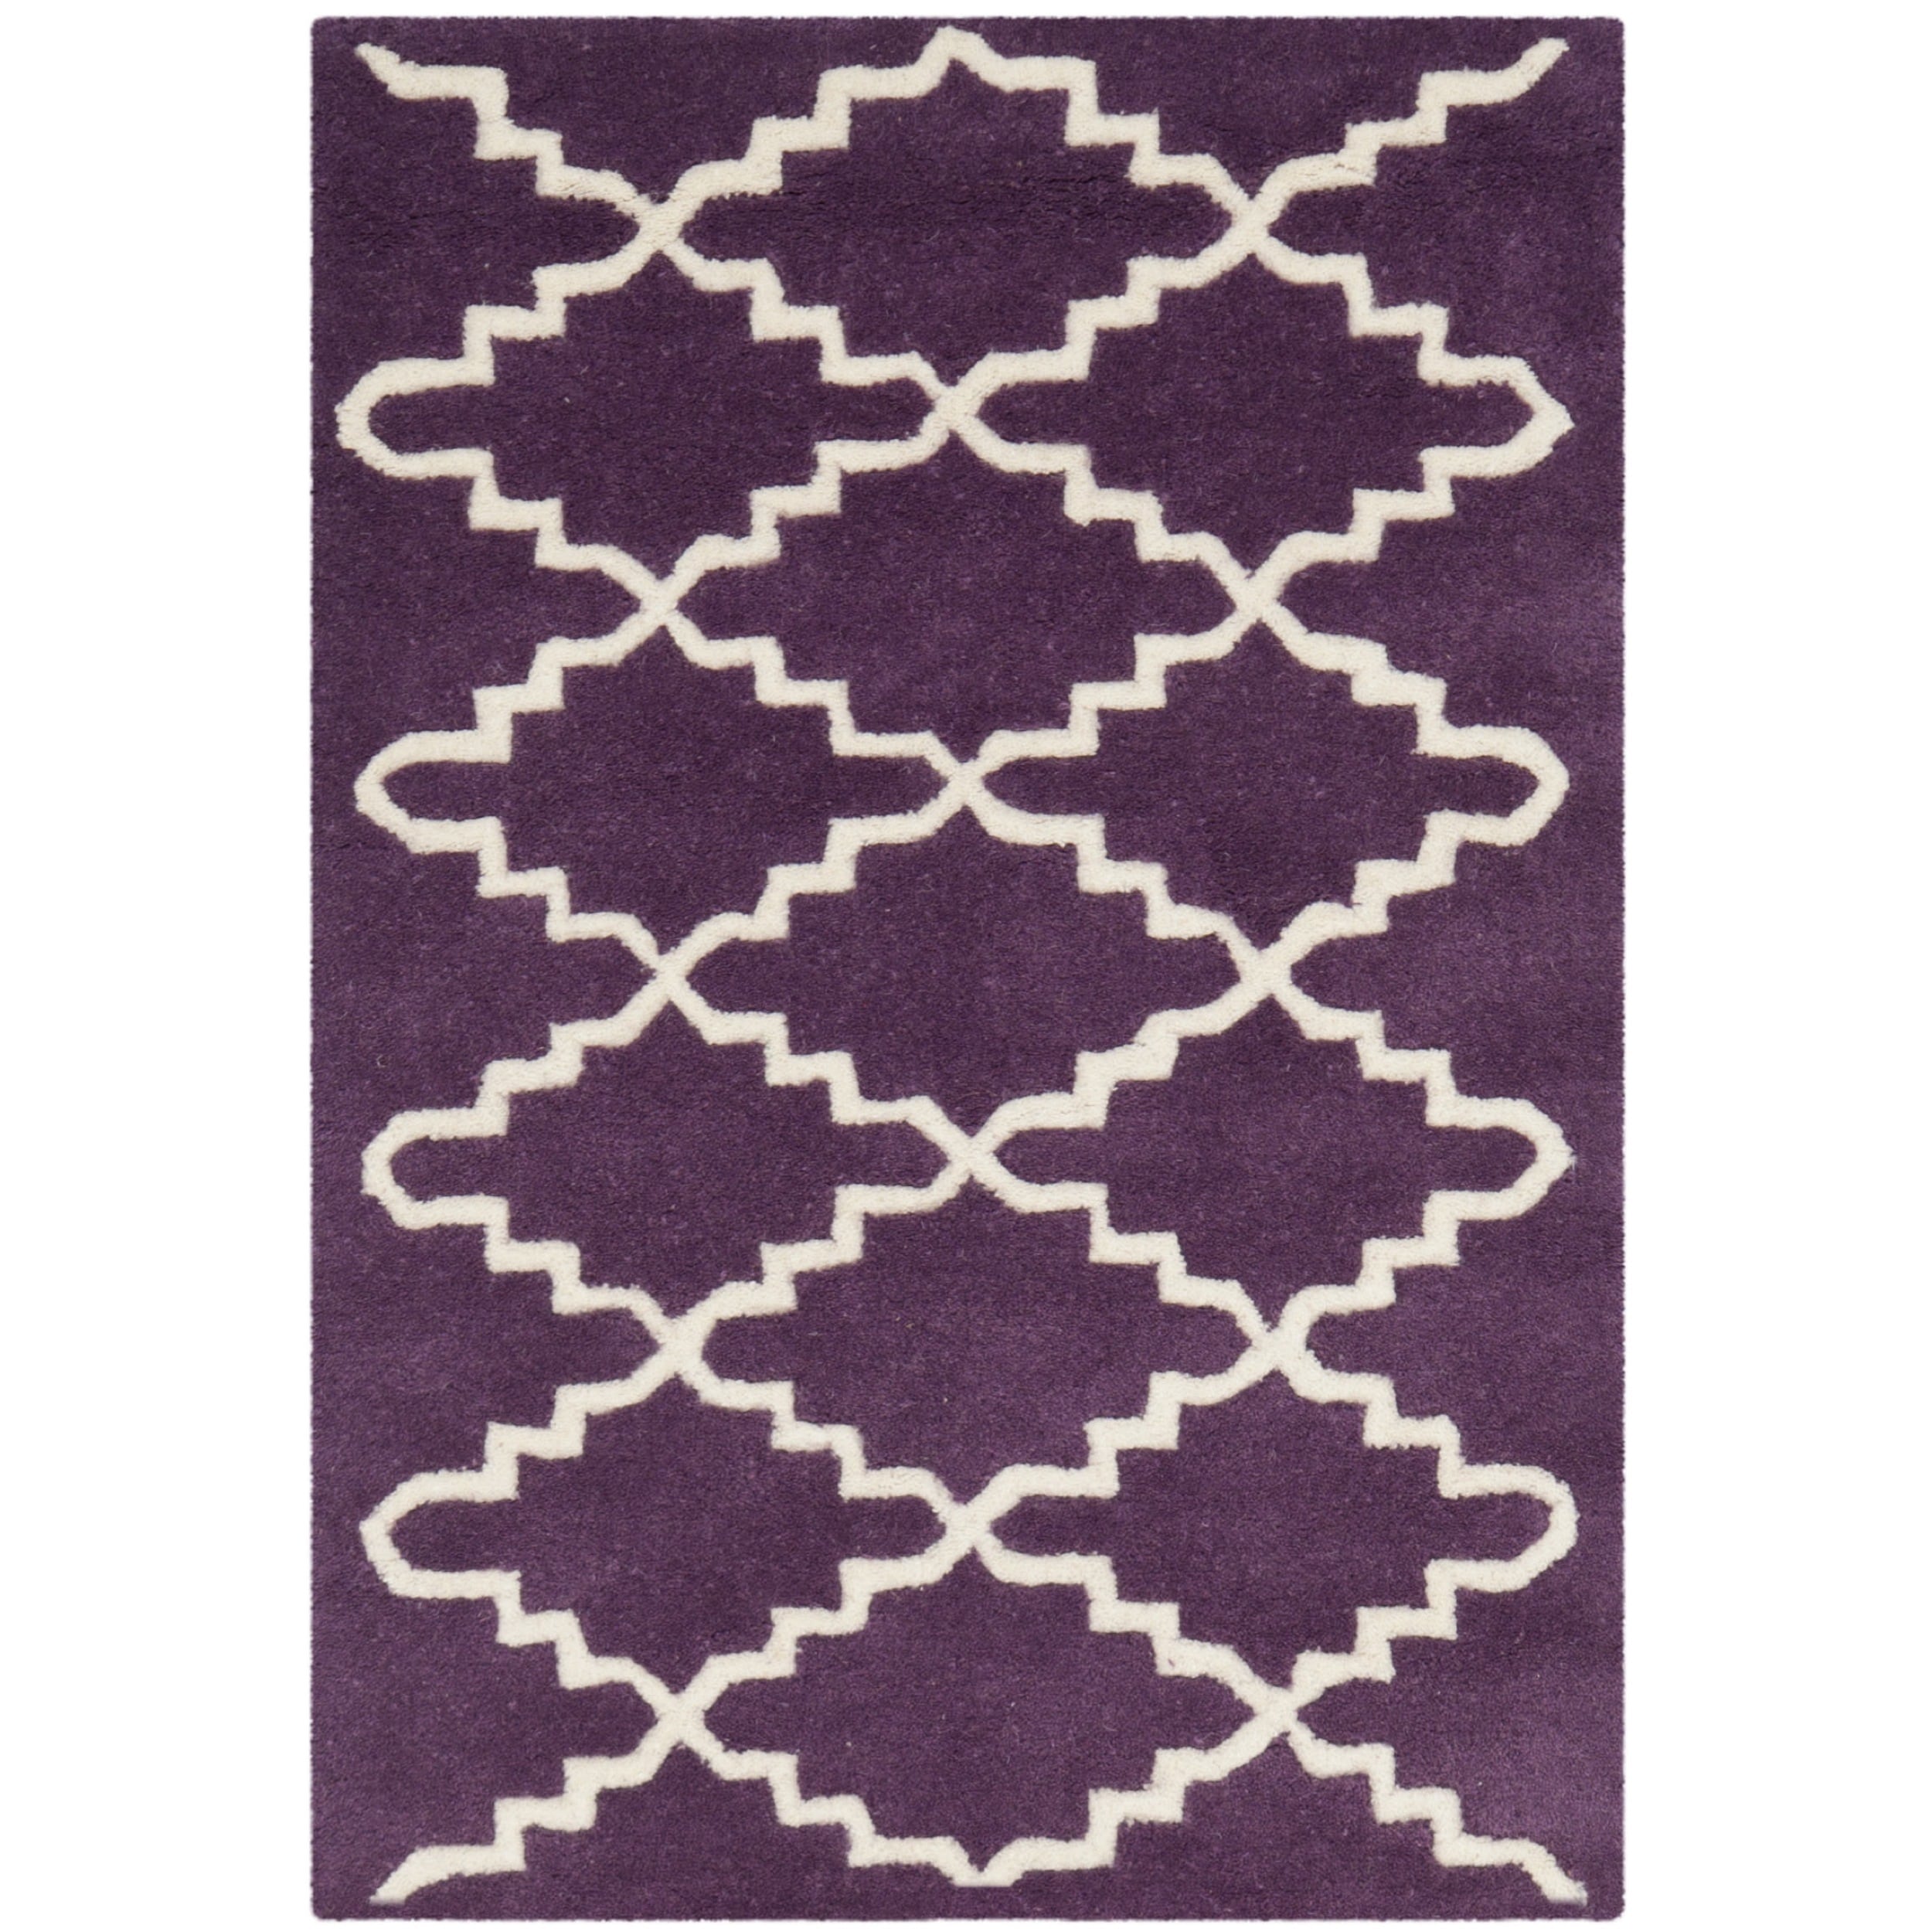 Safavieh Handmade Moroccan Chatham Purple/ Ivory Wool Accent Rug (23 X 5)